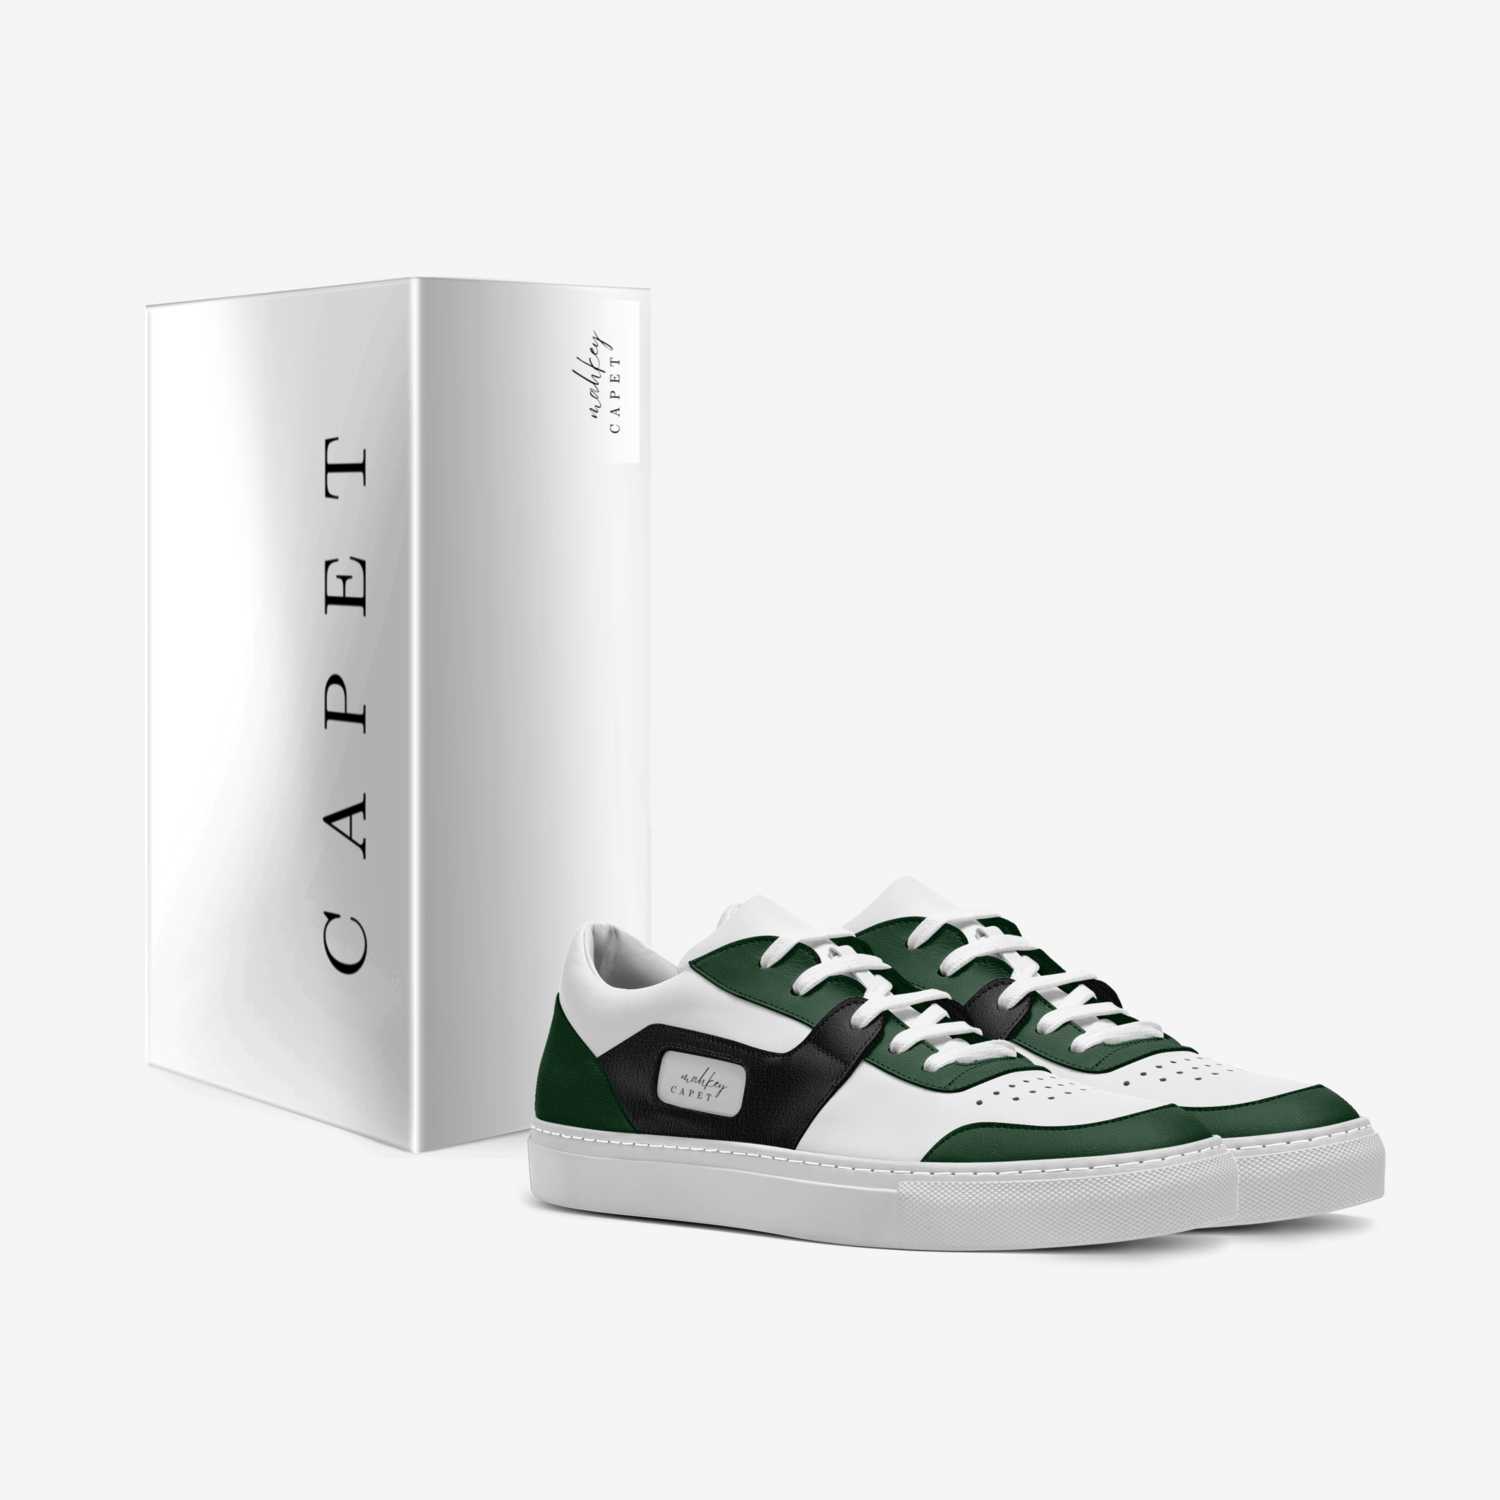 Capet custom made in Italy shoes by Mahir Kapetanović | Box view